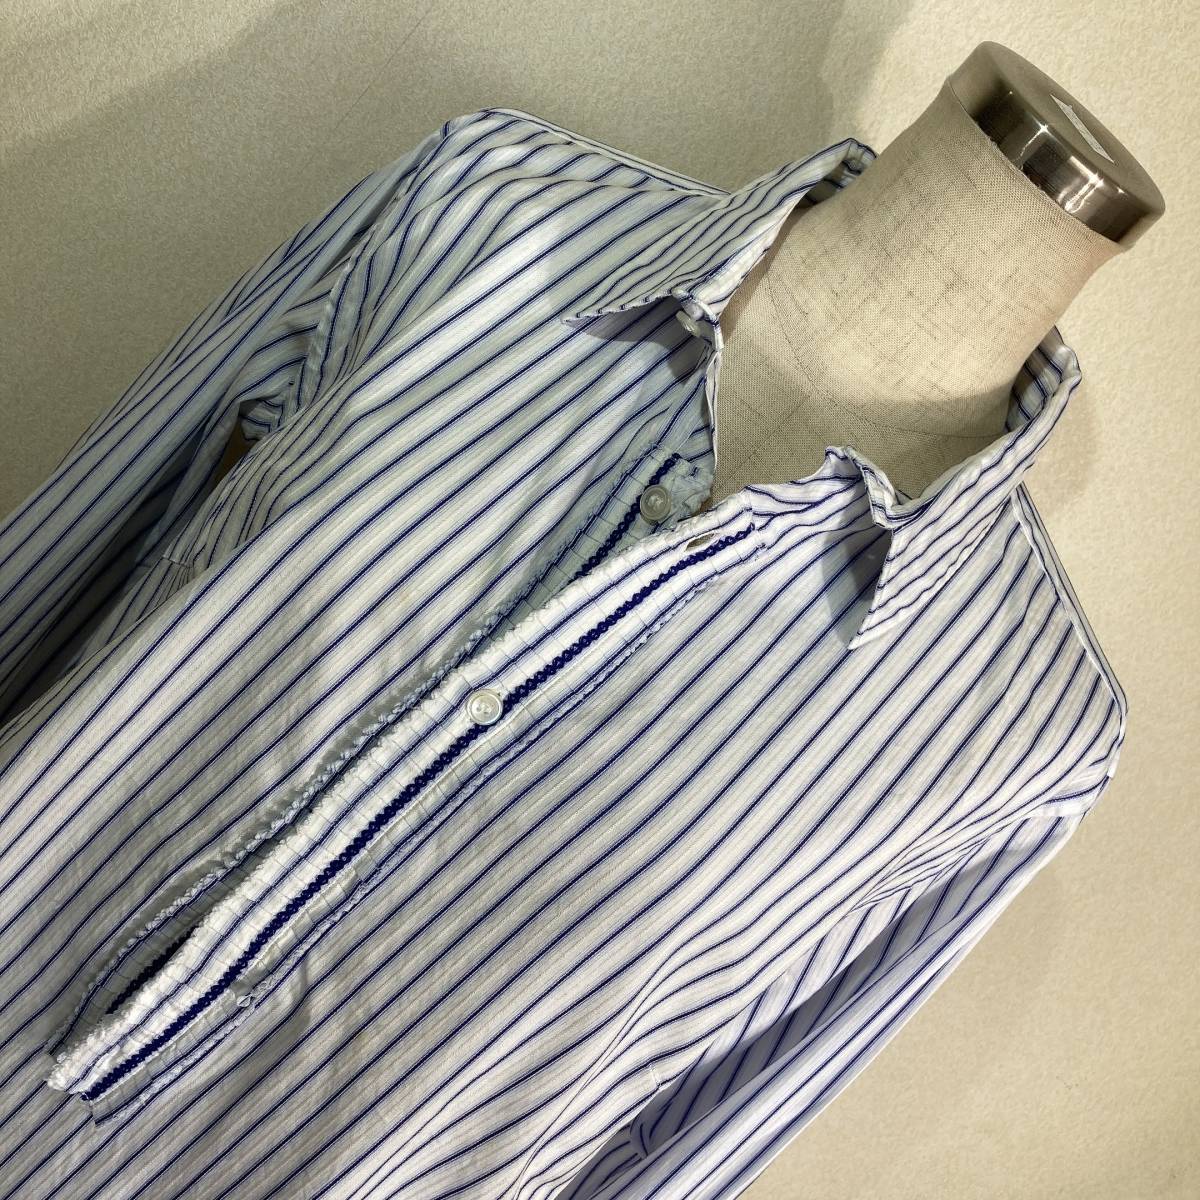 B116 new goods!# Zucca * white * navy blue stripe * pull over shirt #M